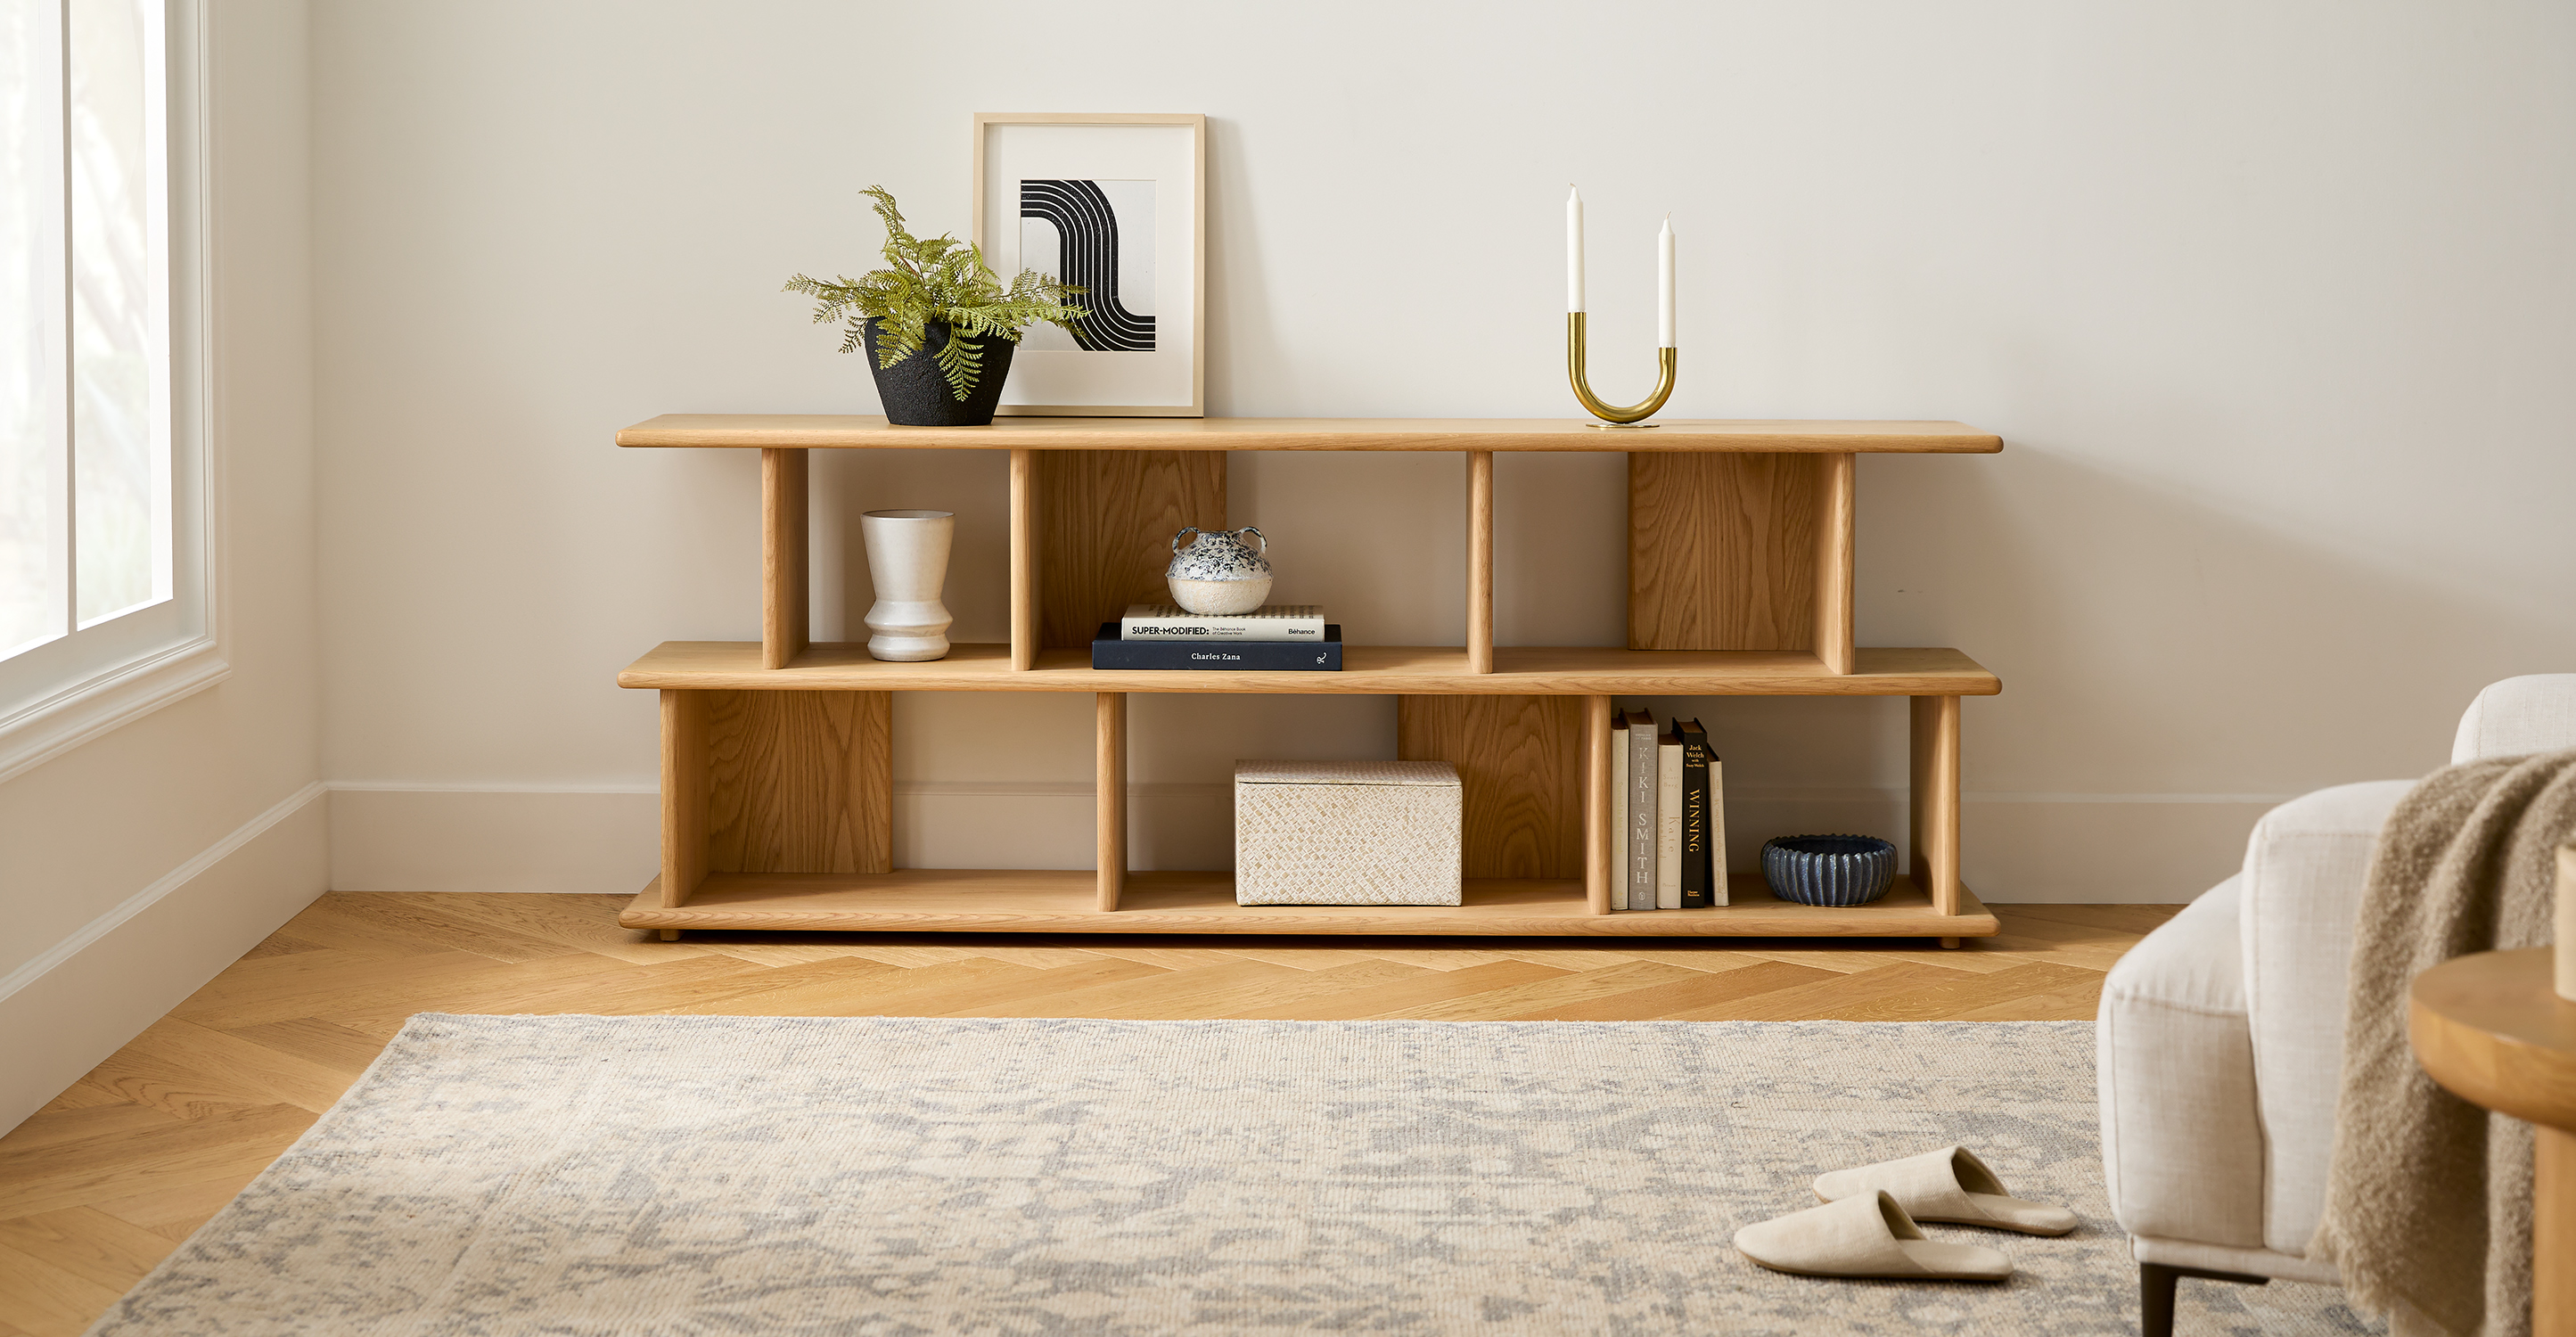 Mueble de madera modelo Alicante color roble claro